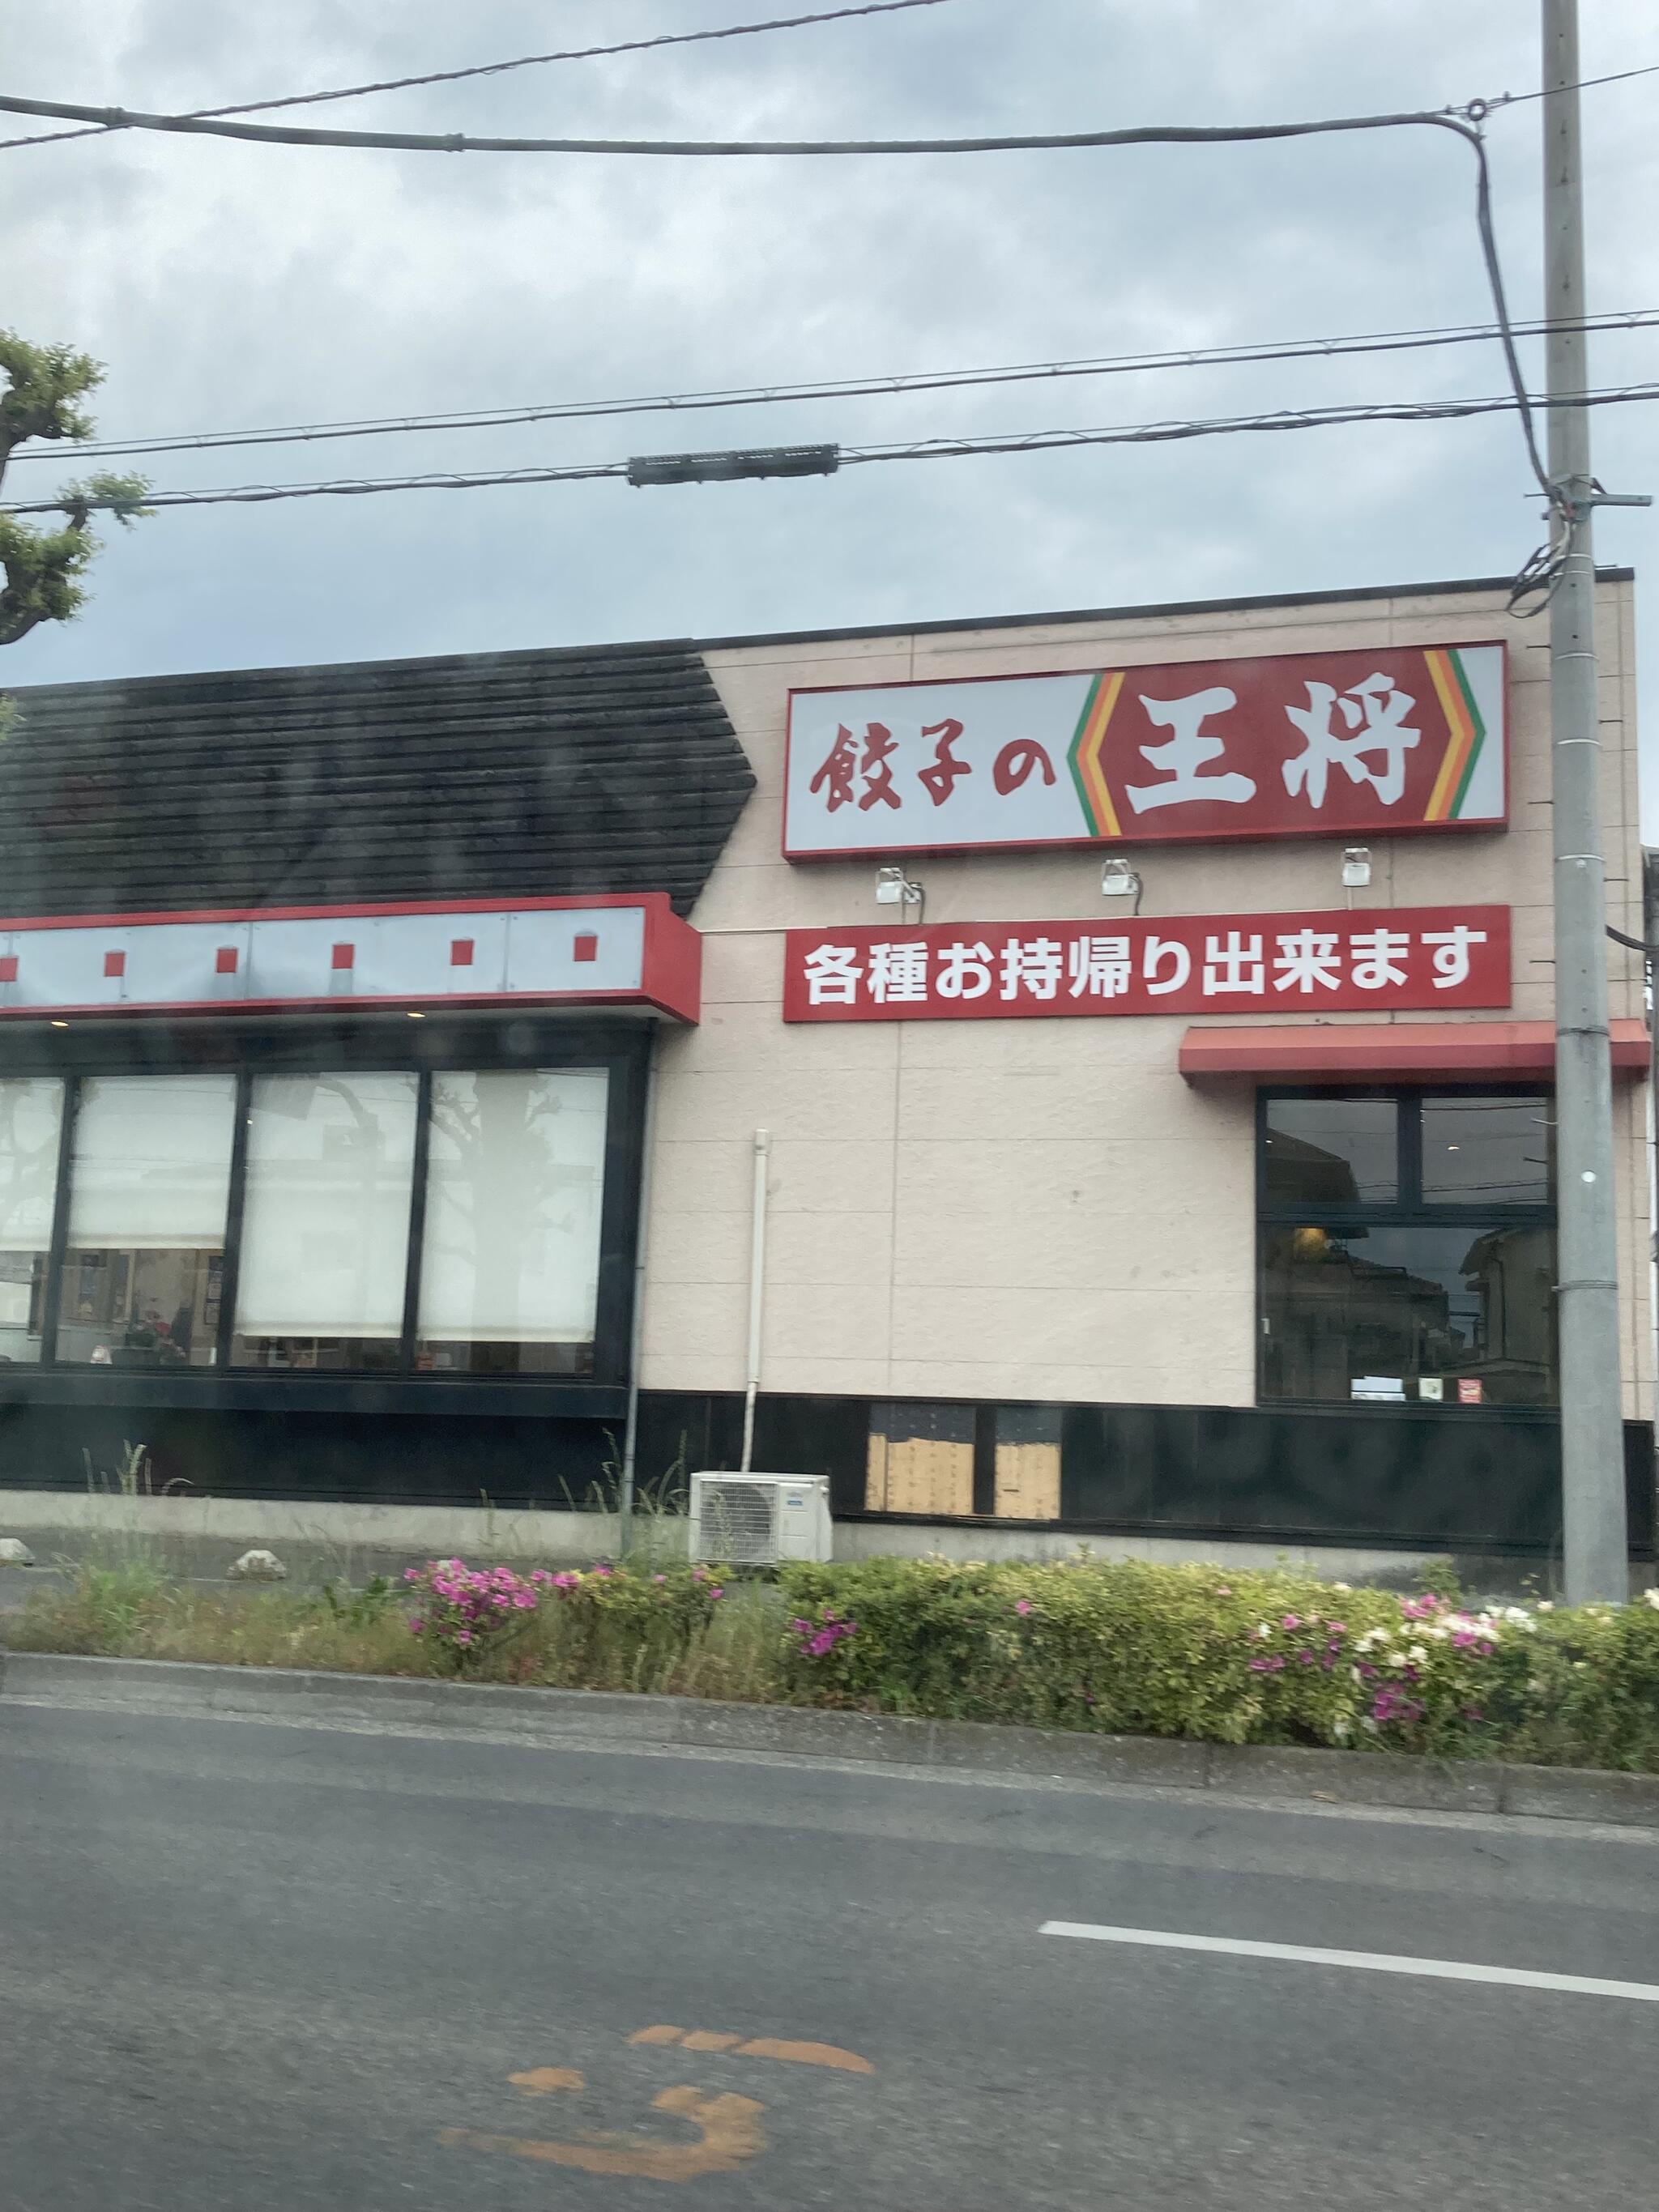 餃子の王将 前橋三俣店の代表写真2